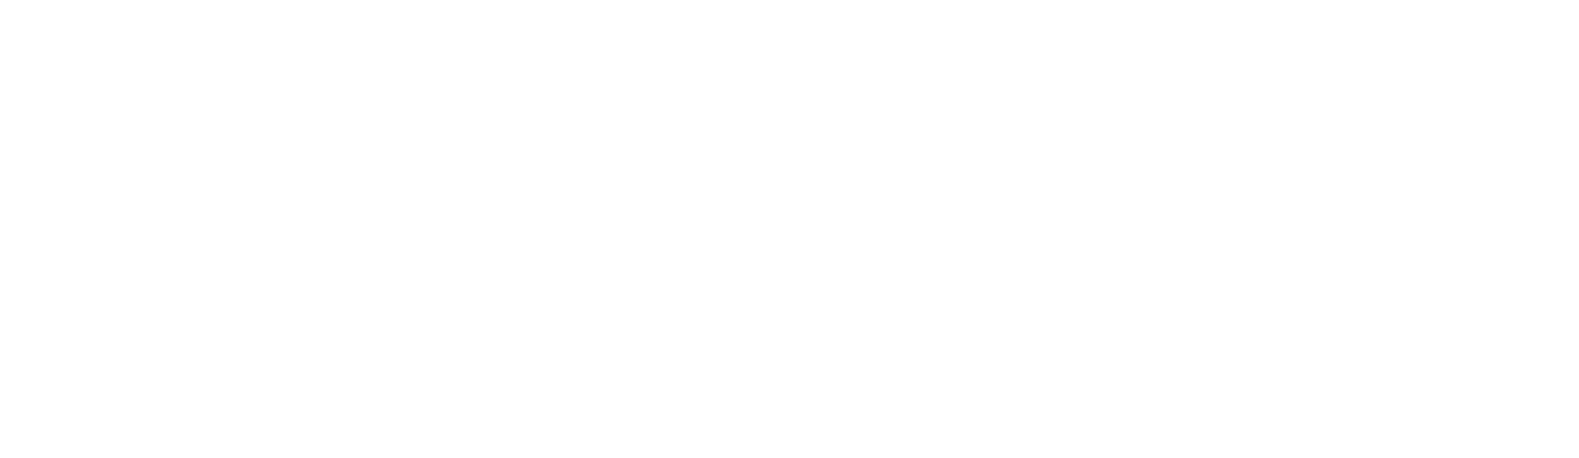 Hess Midstream logo grand pour les fonds sombres (PNG transparent)